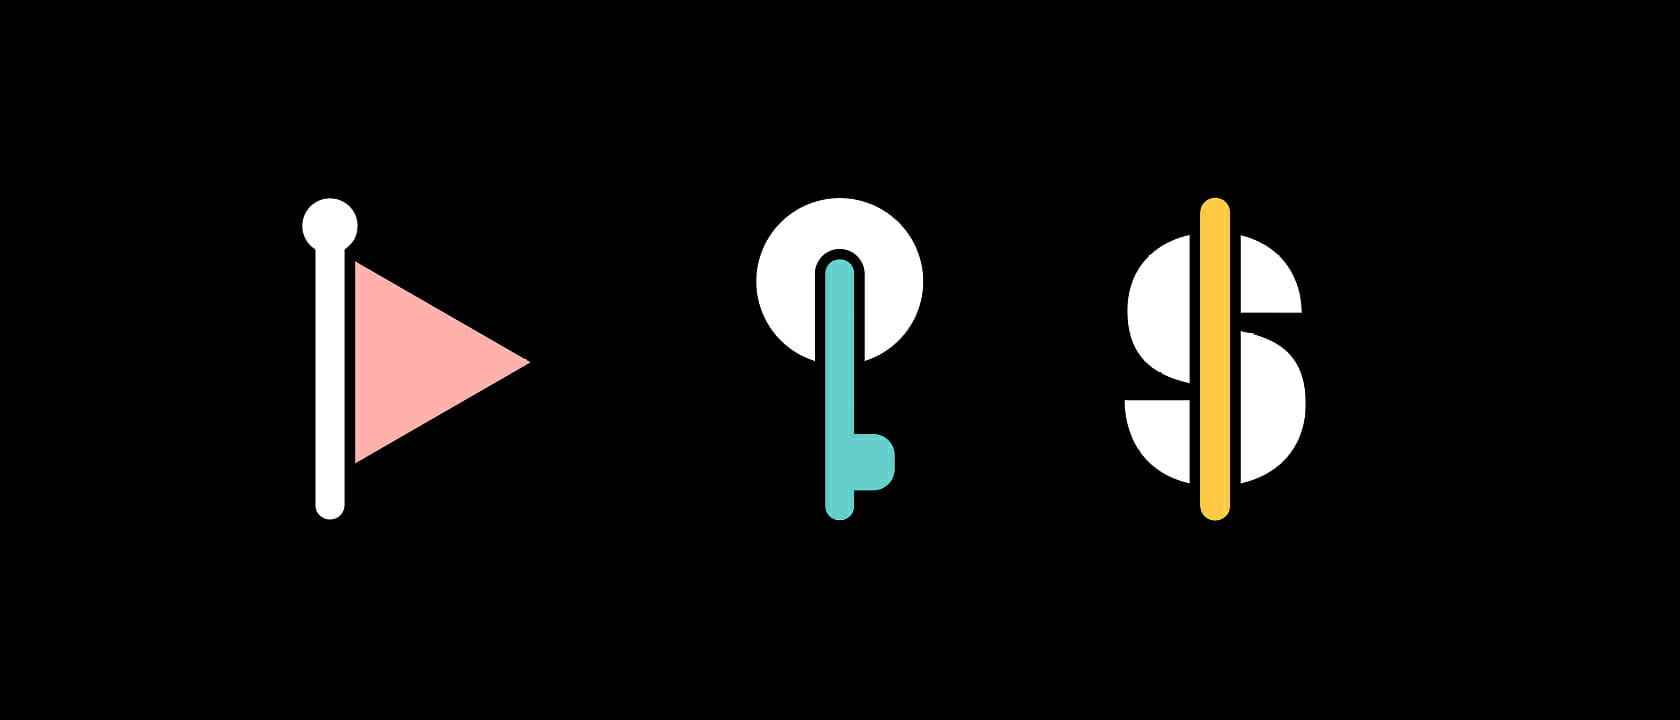 stake icon design examples